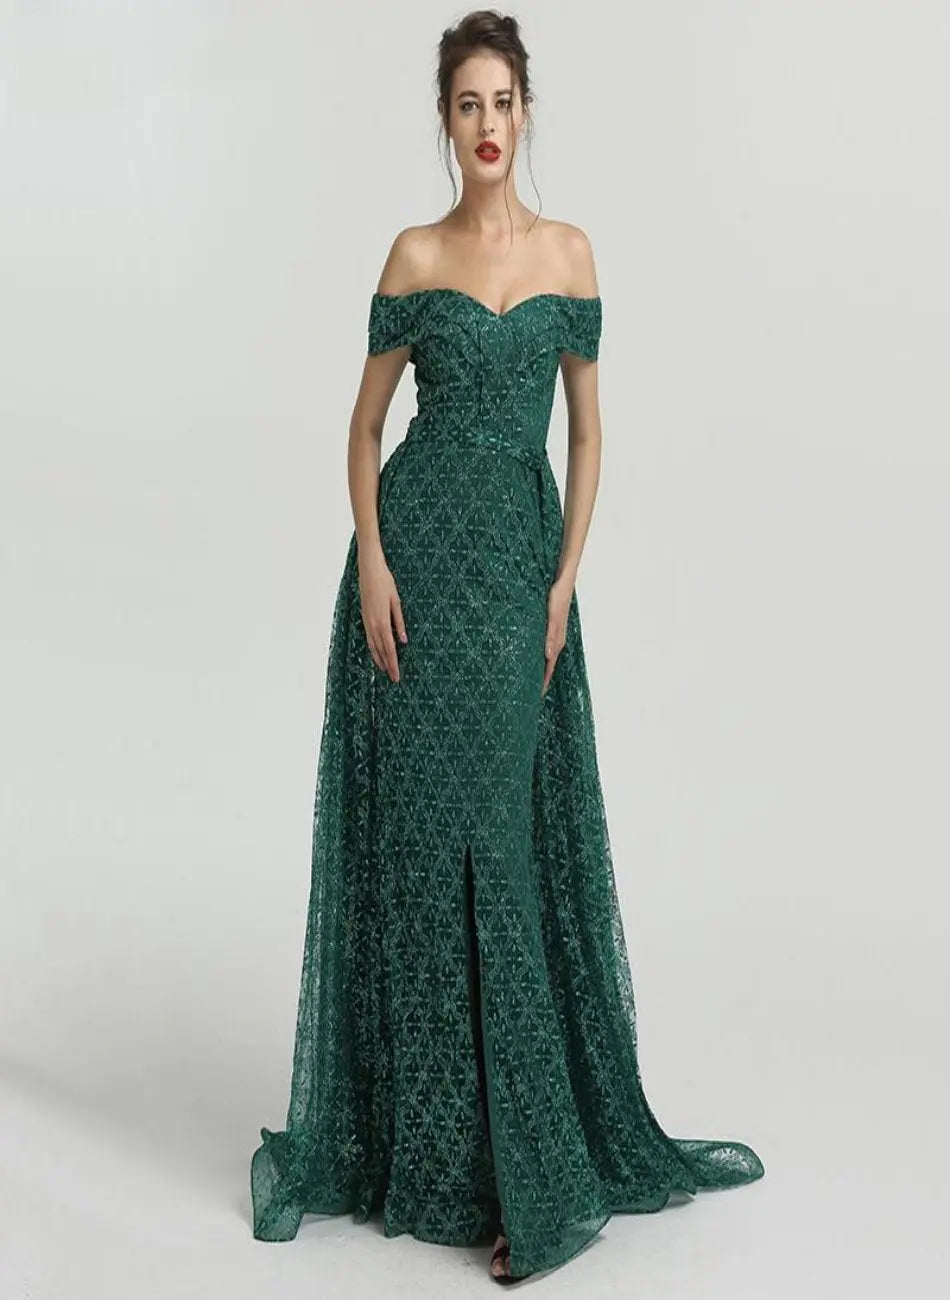 SAINA - Green Glitter Mermaid Evening Gown Mscooco.co.uk